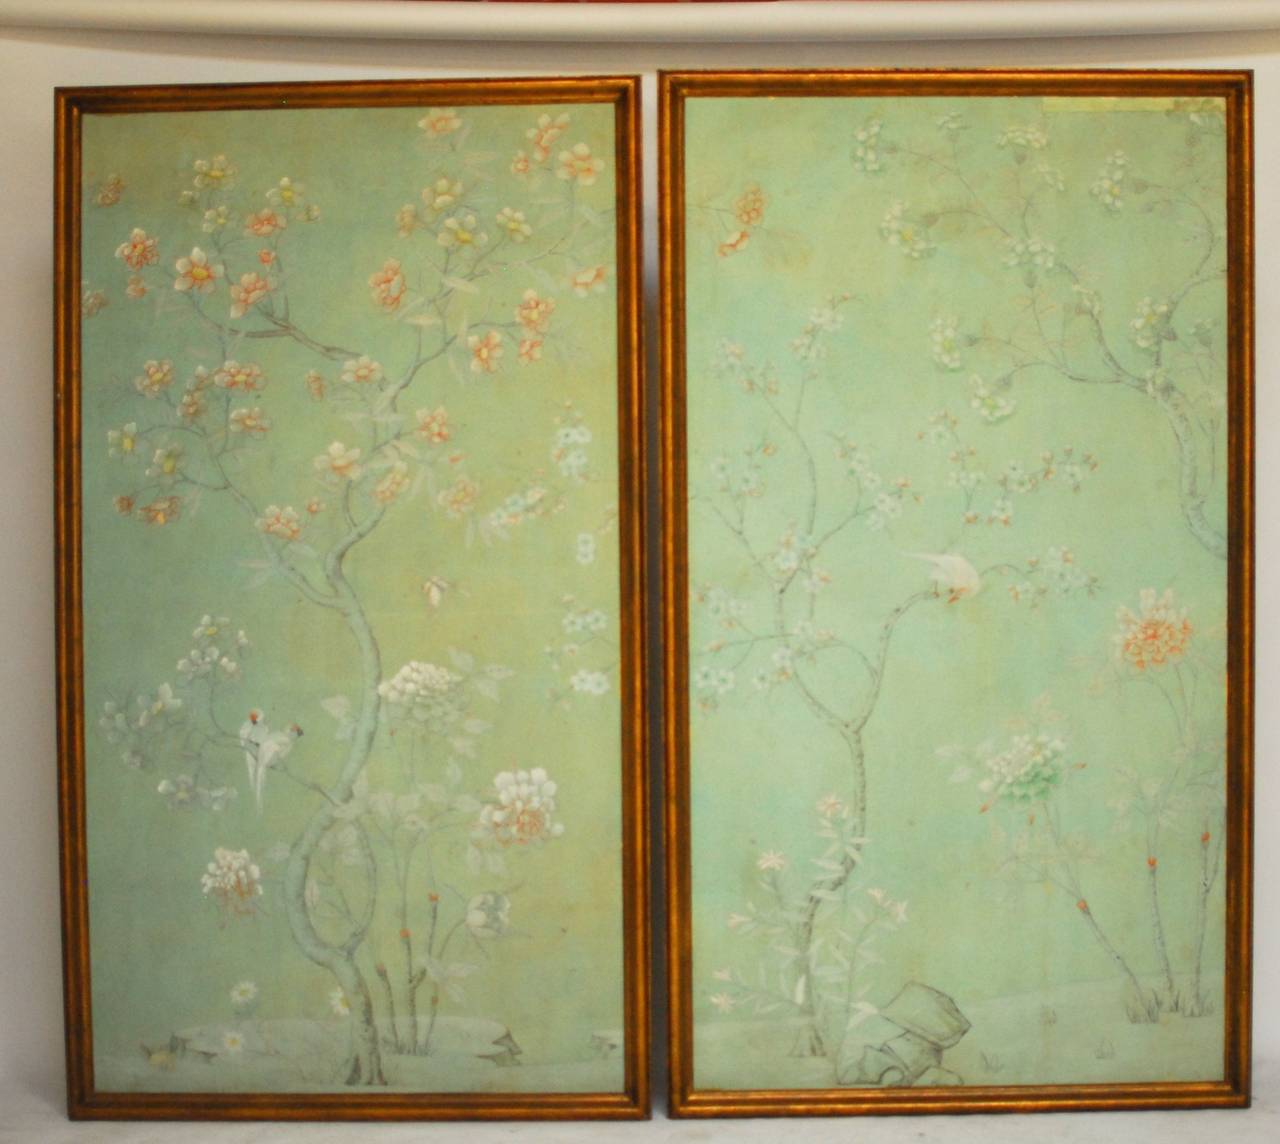 48 Chinoiserie Wallpaper Panels For Sale On Wallpapersafari,Creamy Lemon Parmesan Chicken